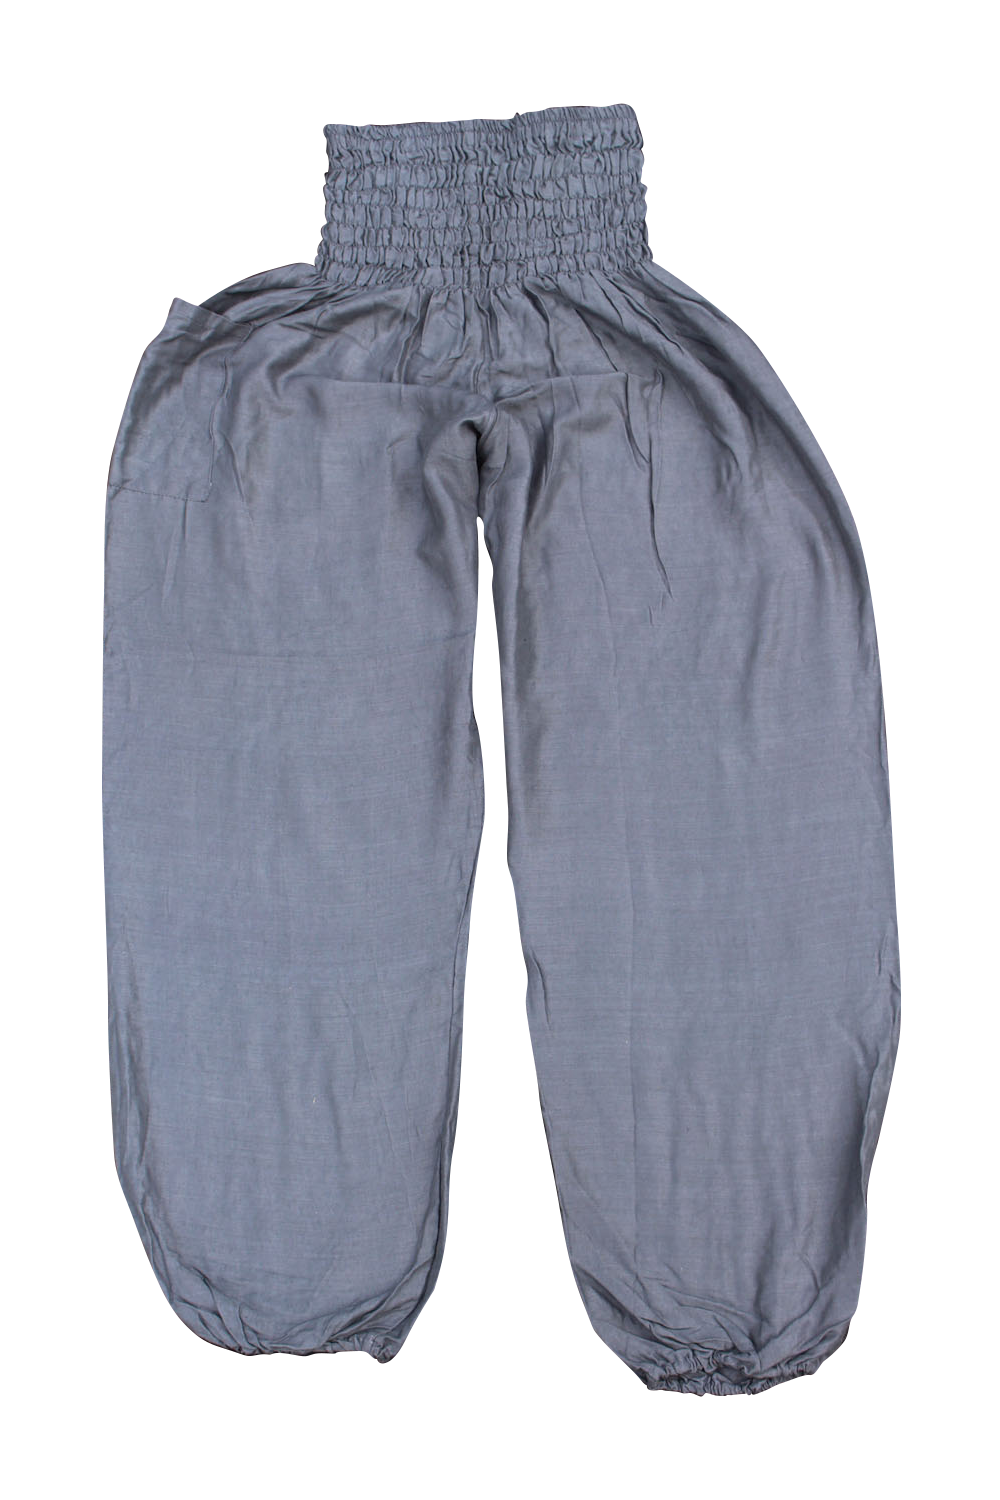 gray solid color harem yoga pants bohemian island